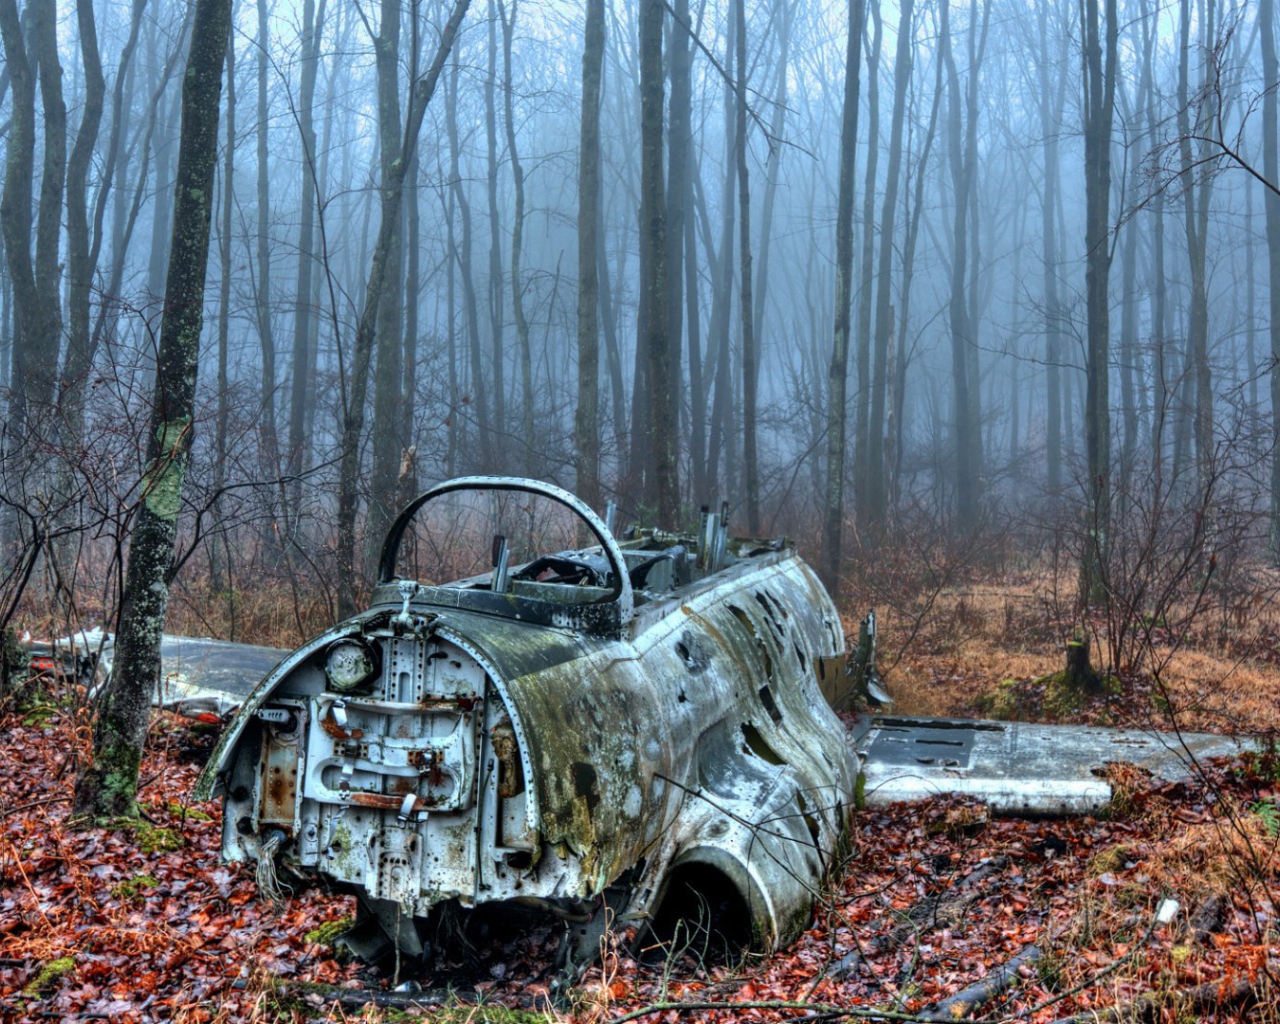 Обломки самолета в лесу